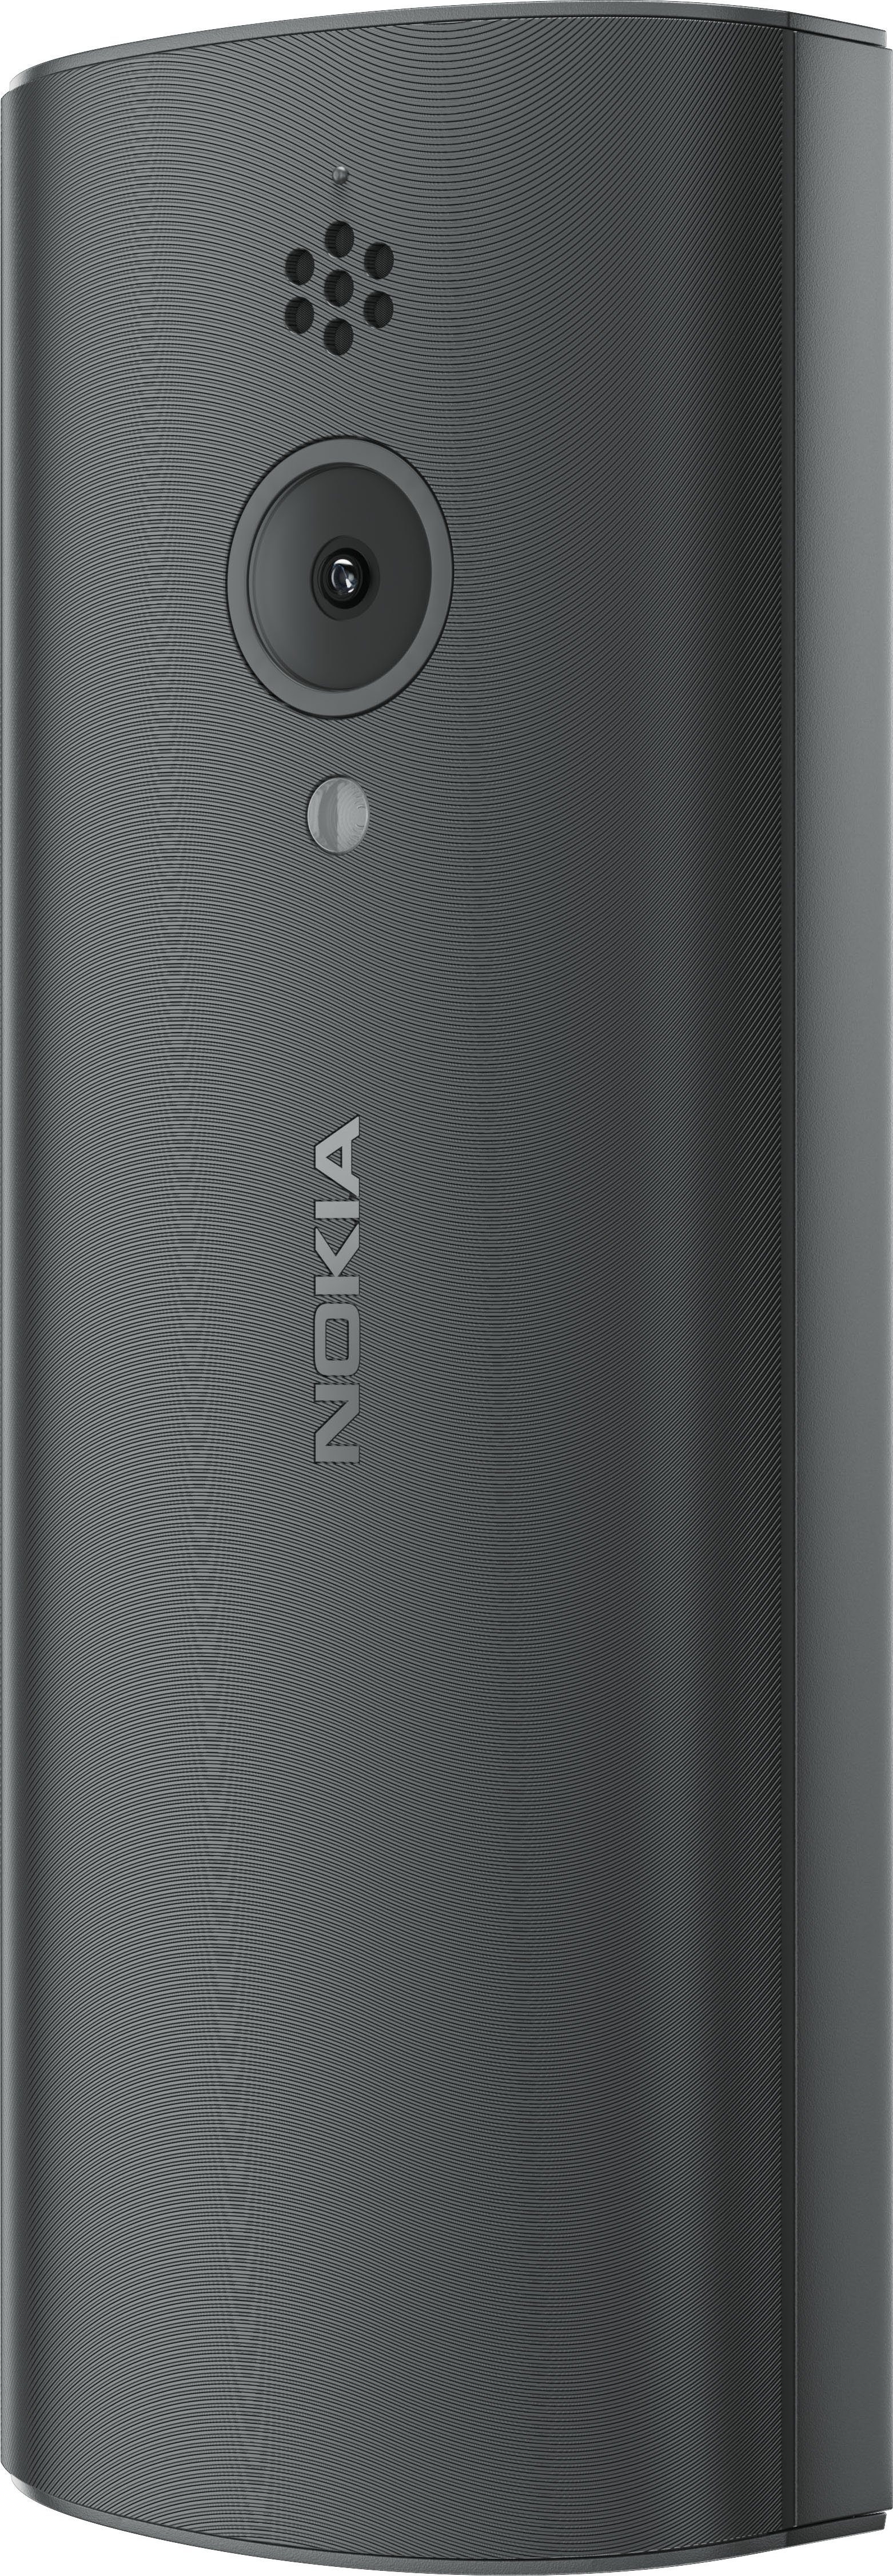 Zoll) Edition (6,09 cm/2,4 150 Nokia 2023 Handy 2G